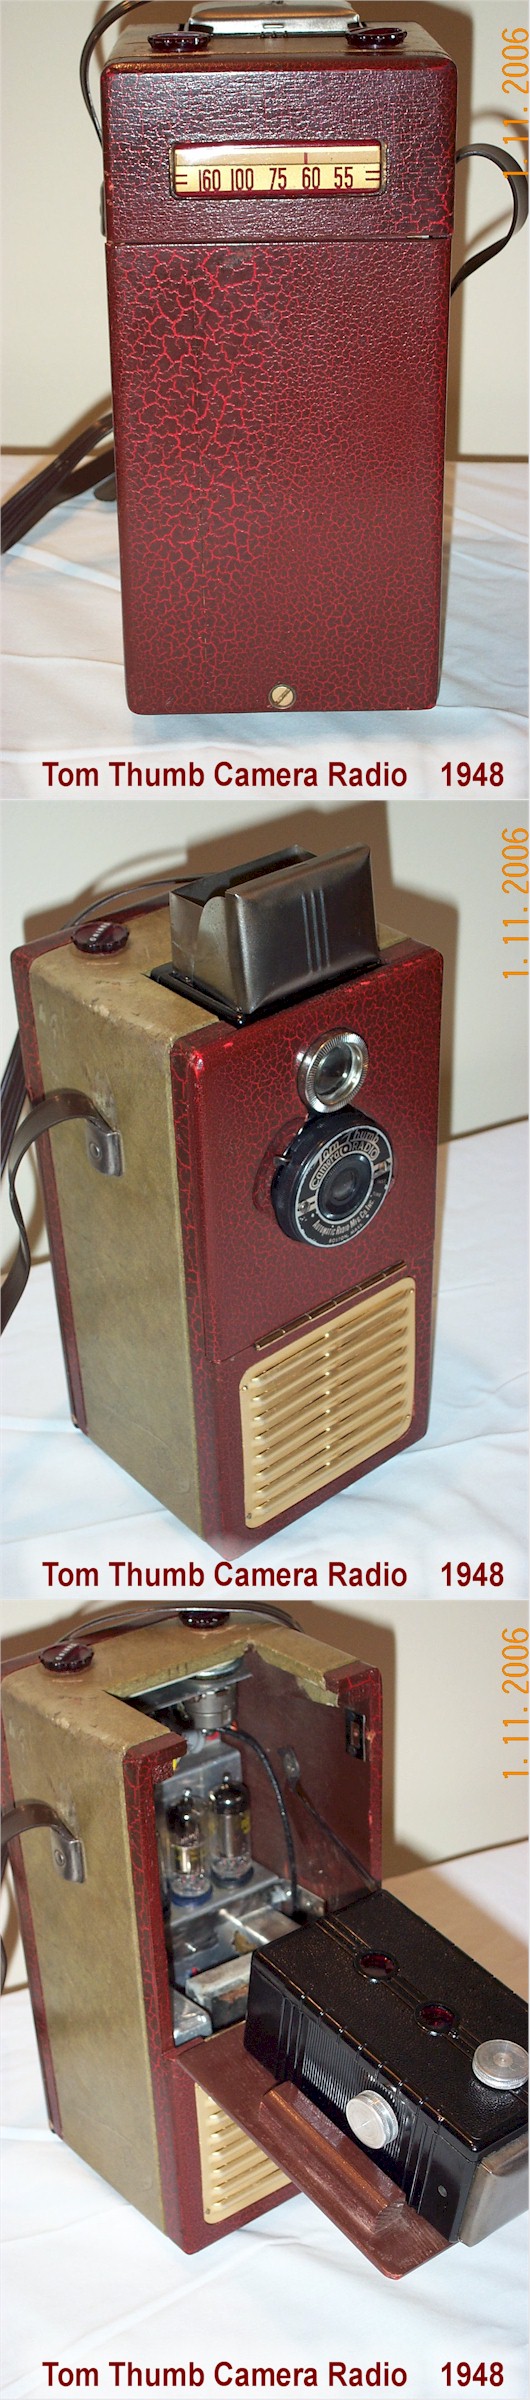 Automatic Tom Thumb Camera Radio 